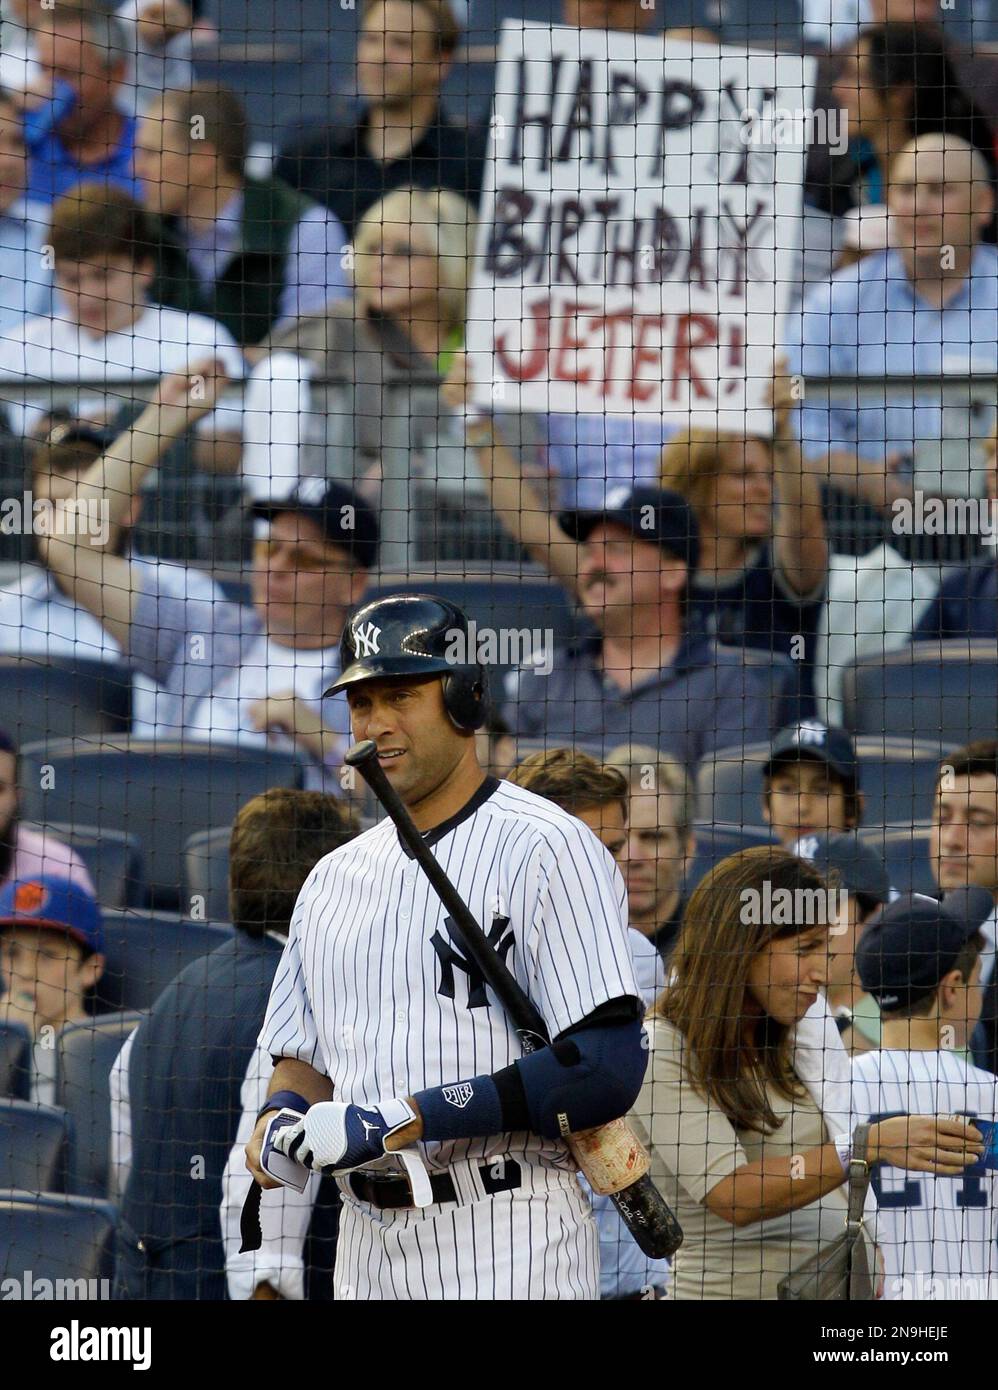 A fan holds a sign wishing New York Yankees on deck batter Derek